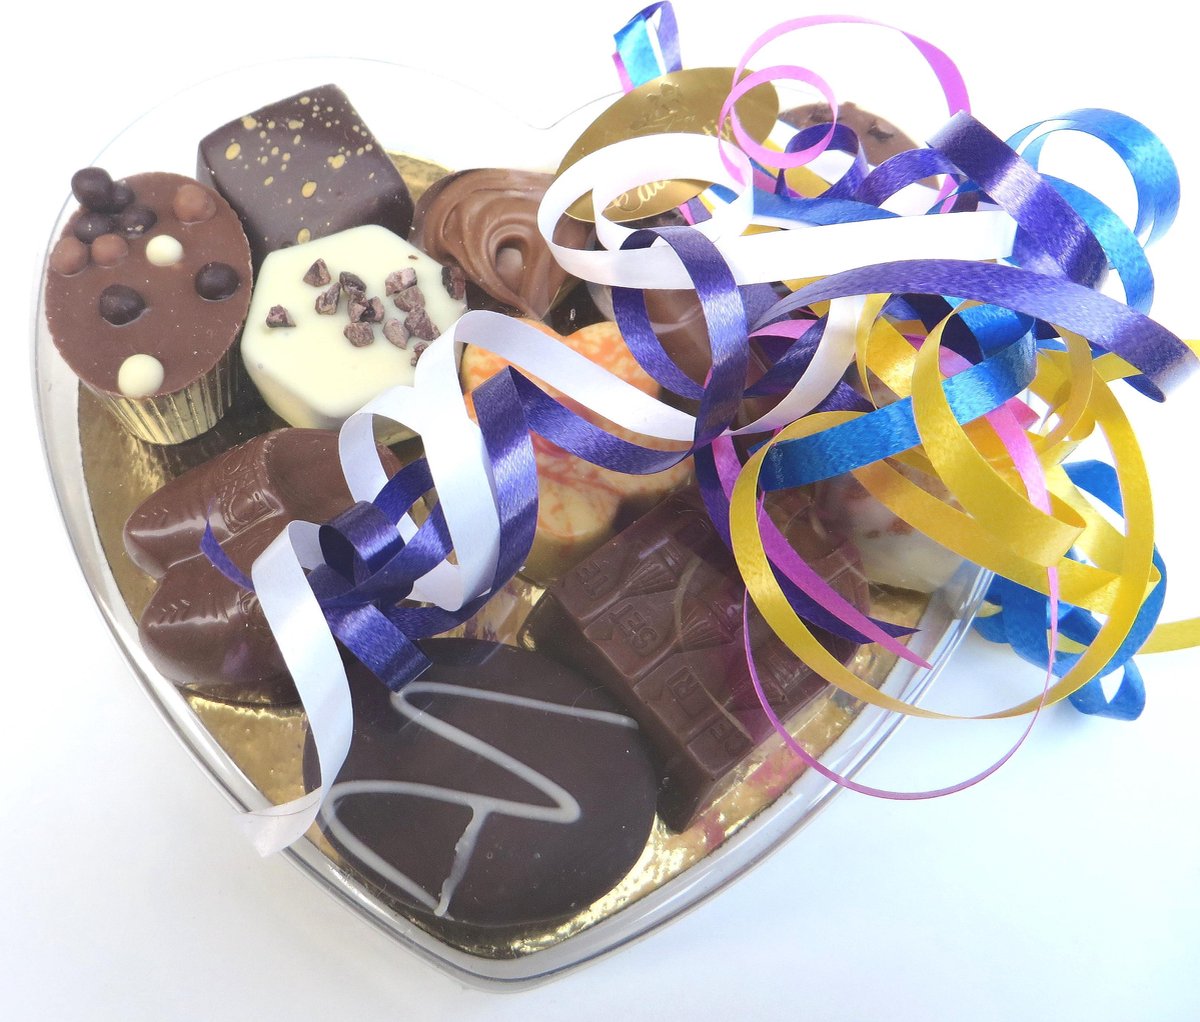 Hart gevuld met handgemaakte bonbons - Chocolade cadeau chocola bonbon. Kerst